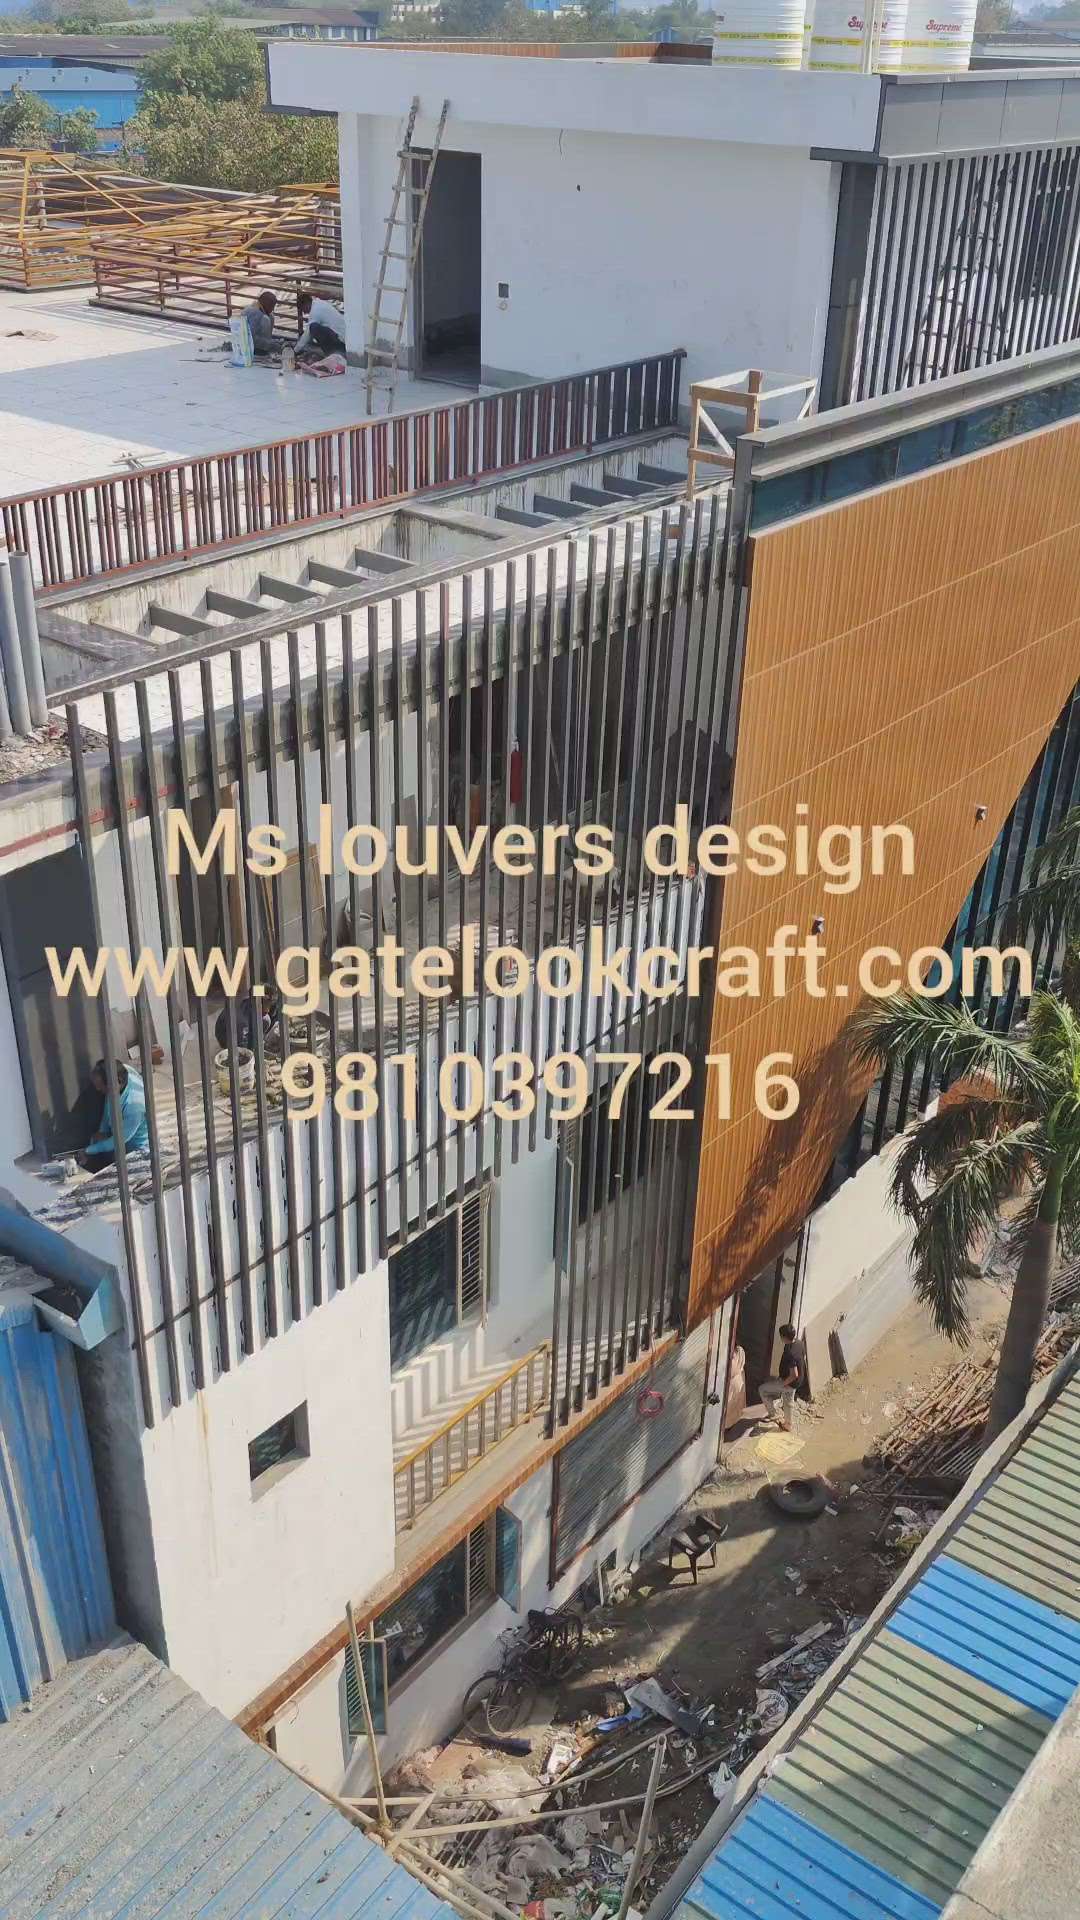 Ms louvers design by Hibza sterling interiors pvt ltd #gatelookcraft 
#louvers #frontelevation #elevation #metalwork #Railingdesign #Railing #gates